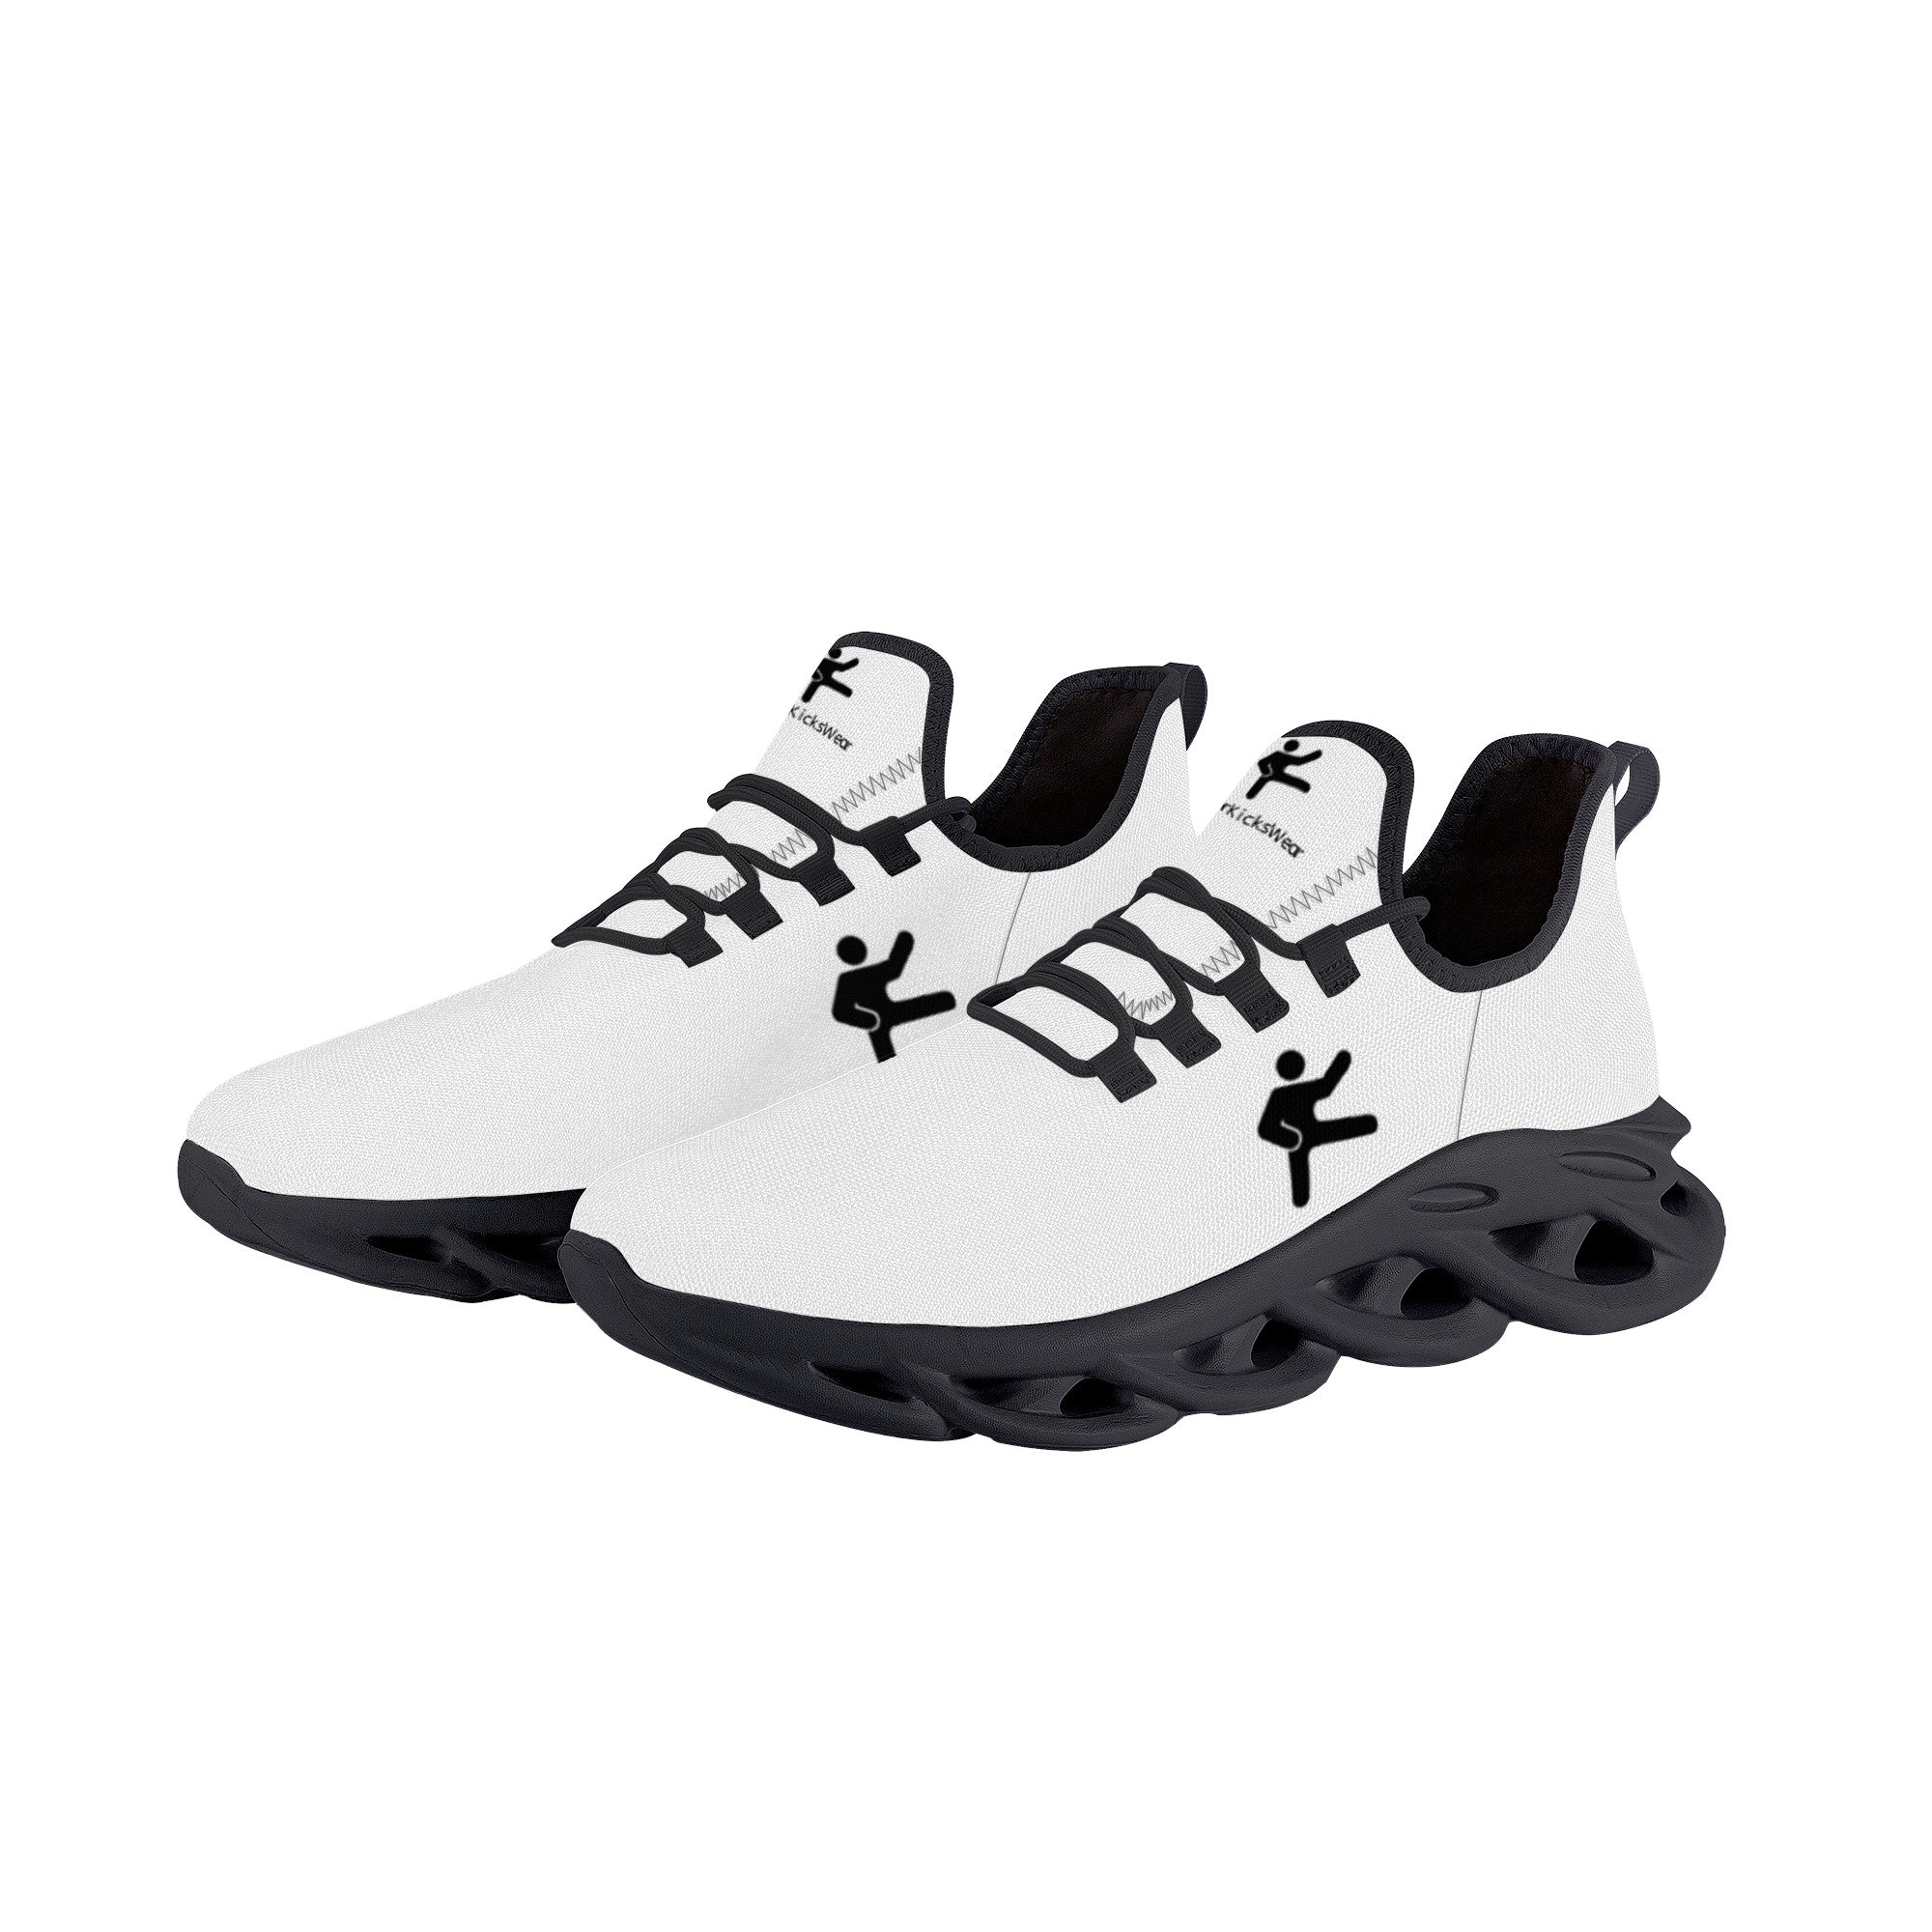 Just for Kicks - Flex Control Sneaker | High Top Customized | Shoe Zero